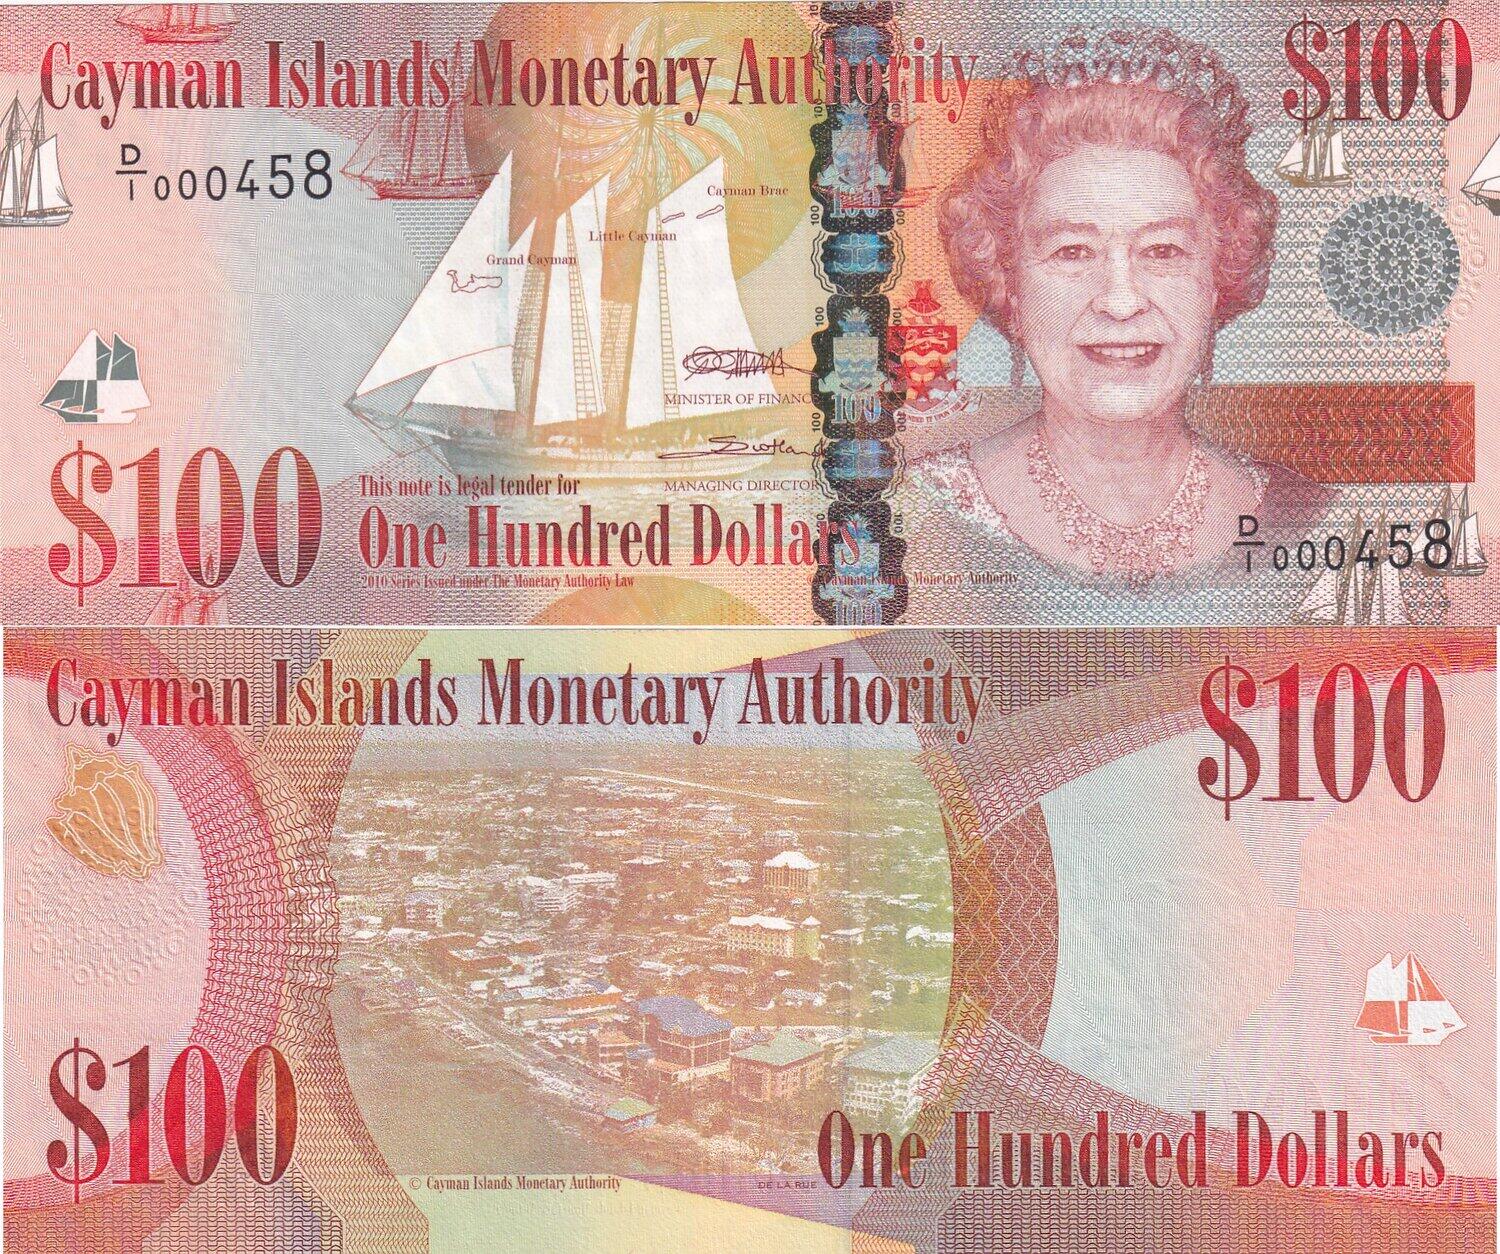 Cayman Islands Dollar – (1 KYD = 1.20 USD)